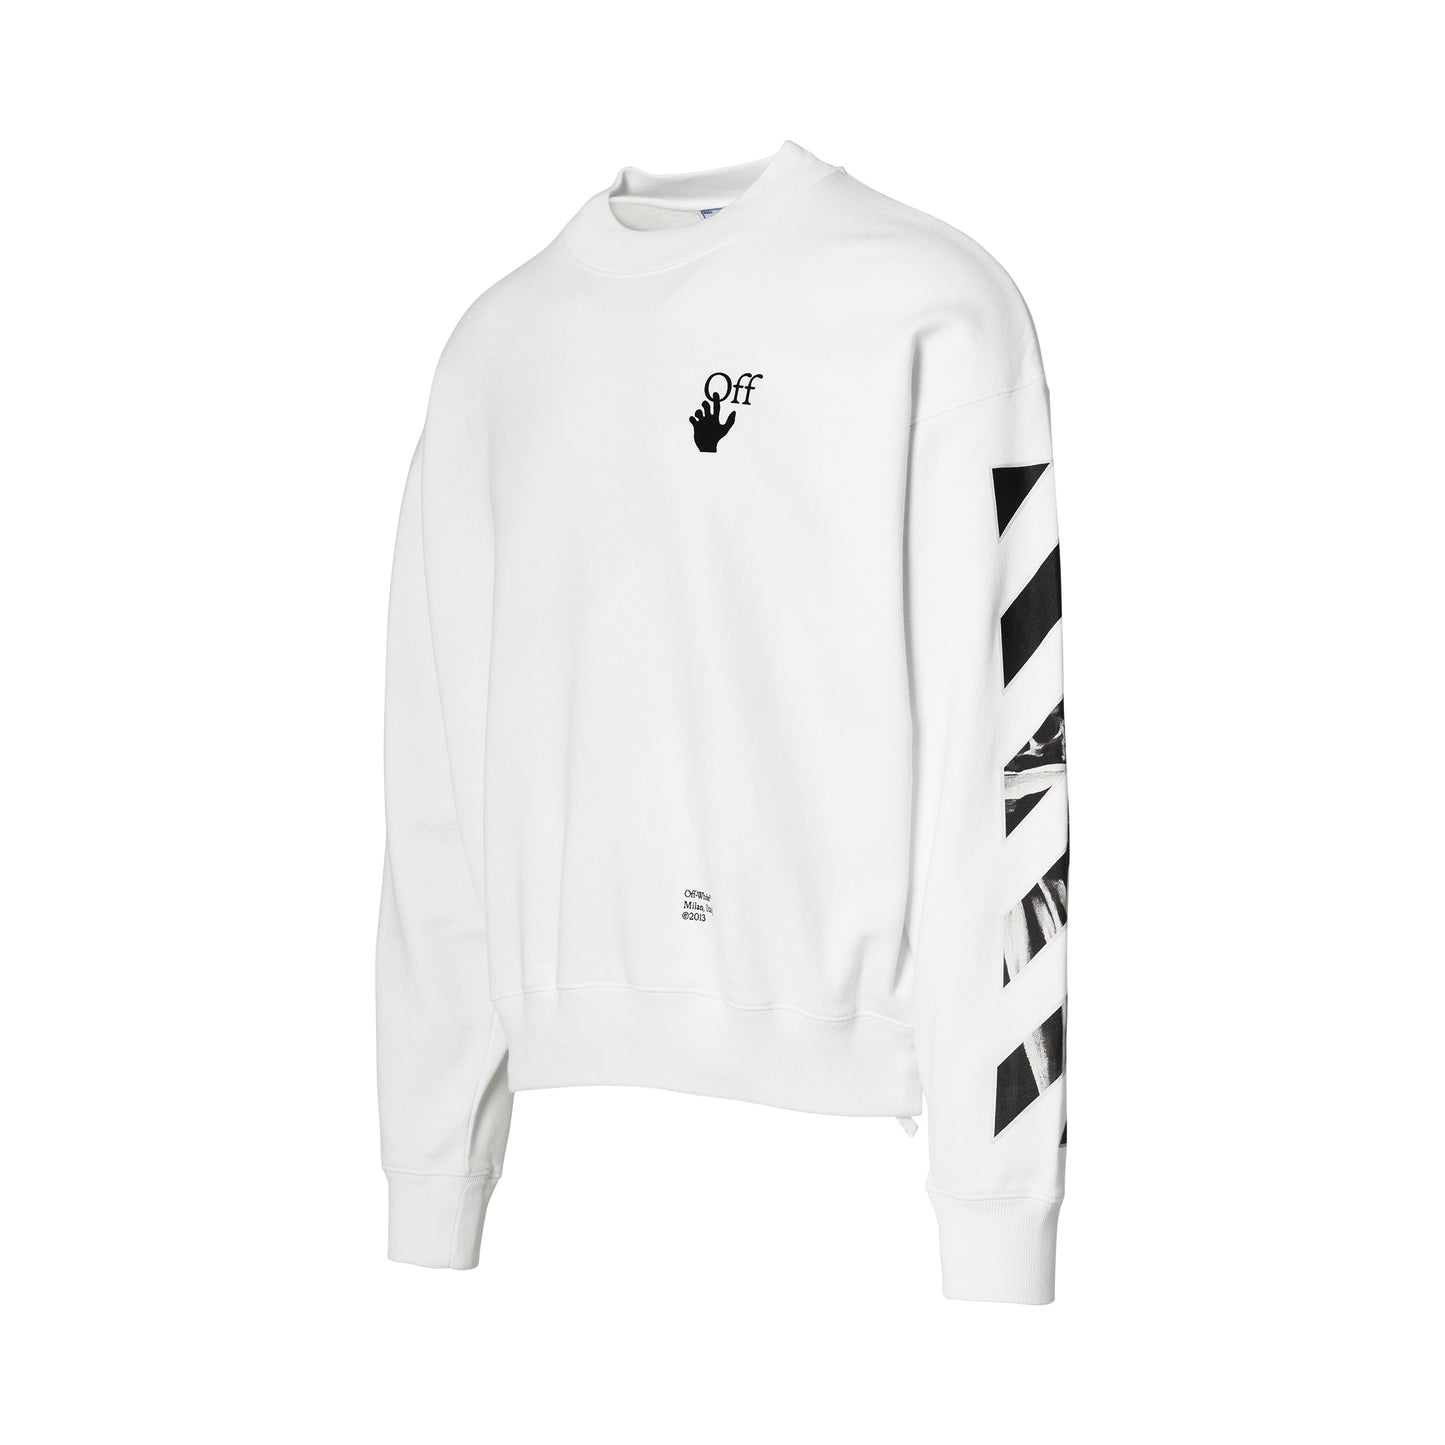 Caravaggio Arrow Skate Fit Sweatshirt in White